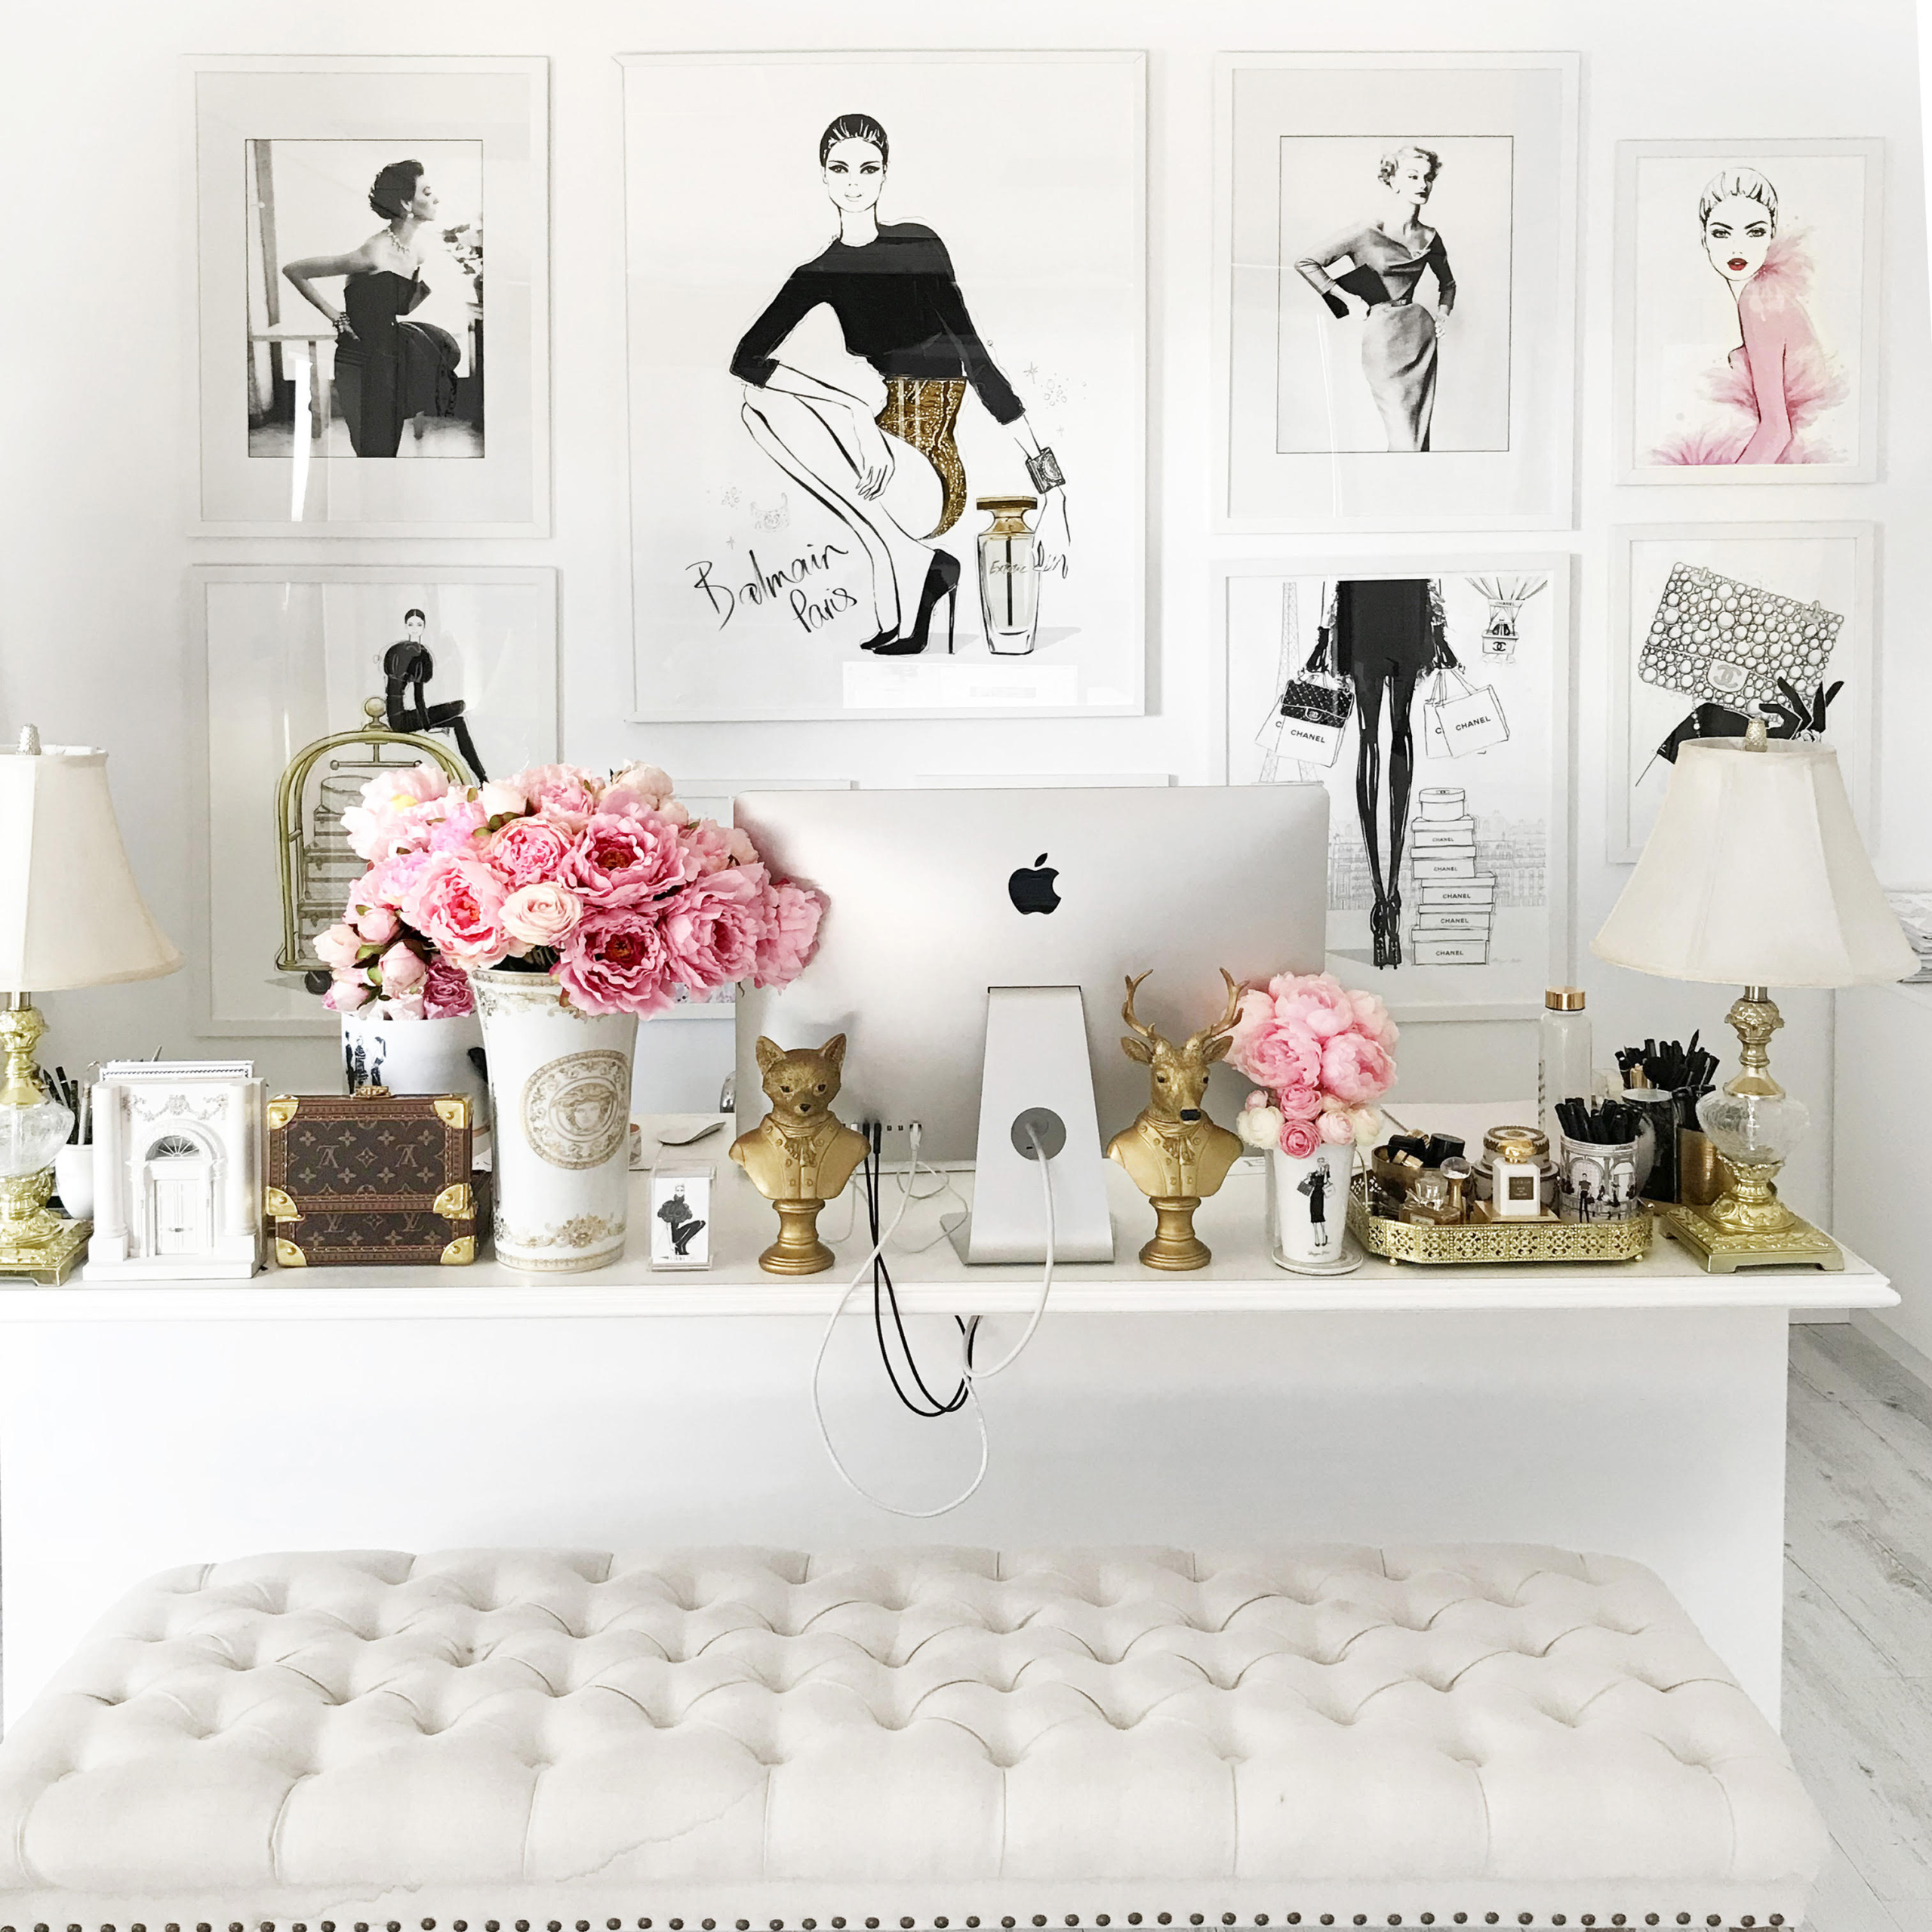 Louis Vuitton - Kerrie Hess Illustration  Home office decor, Home office  design, Office inspiration